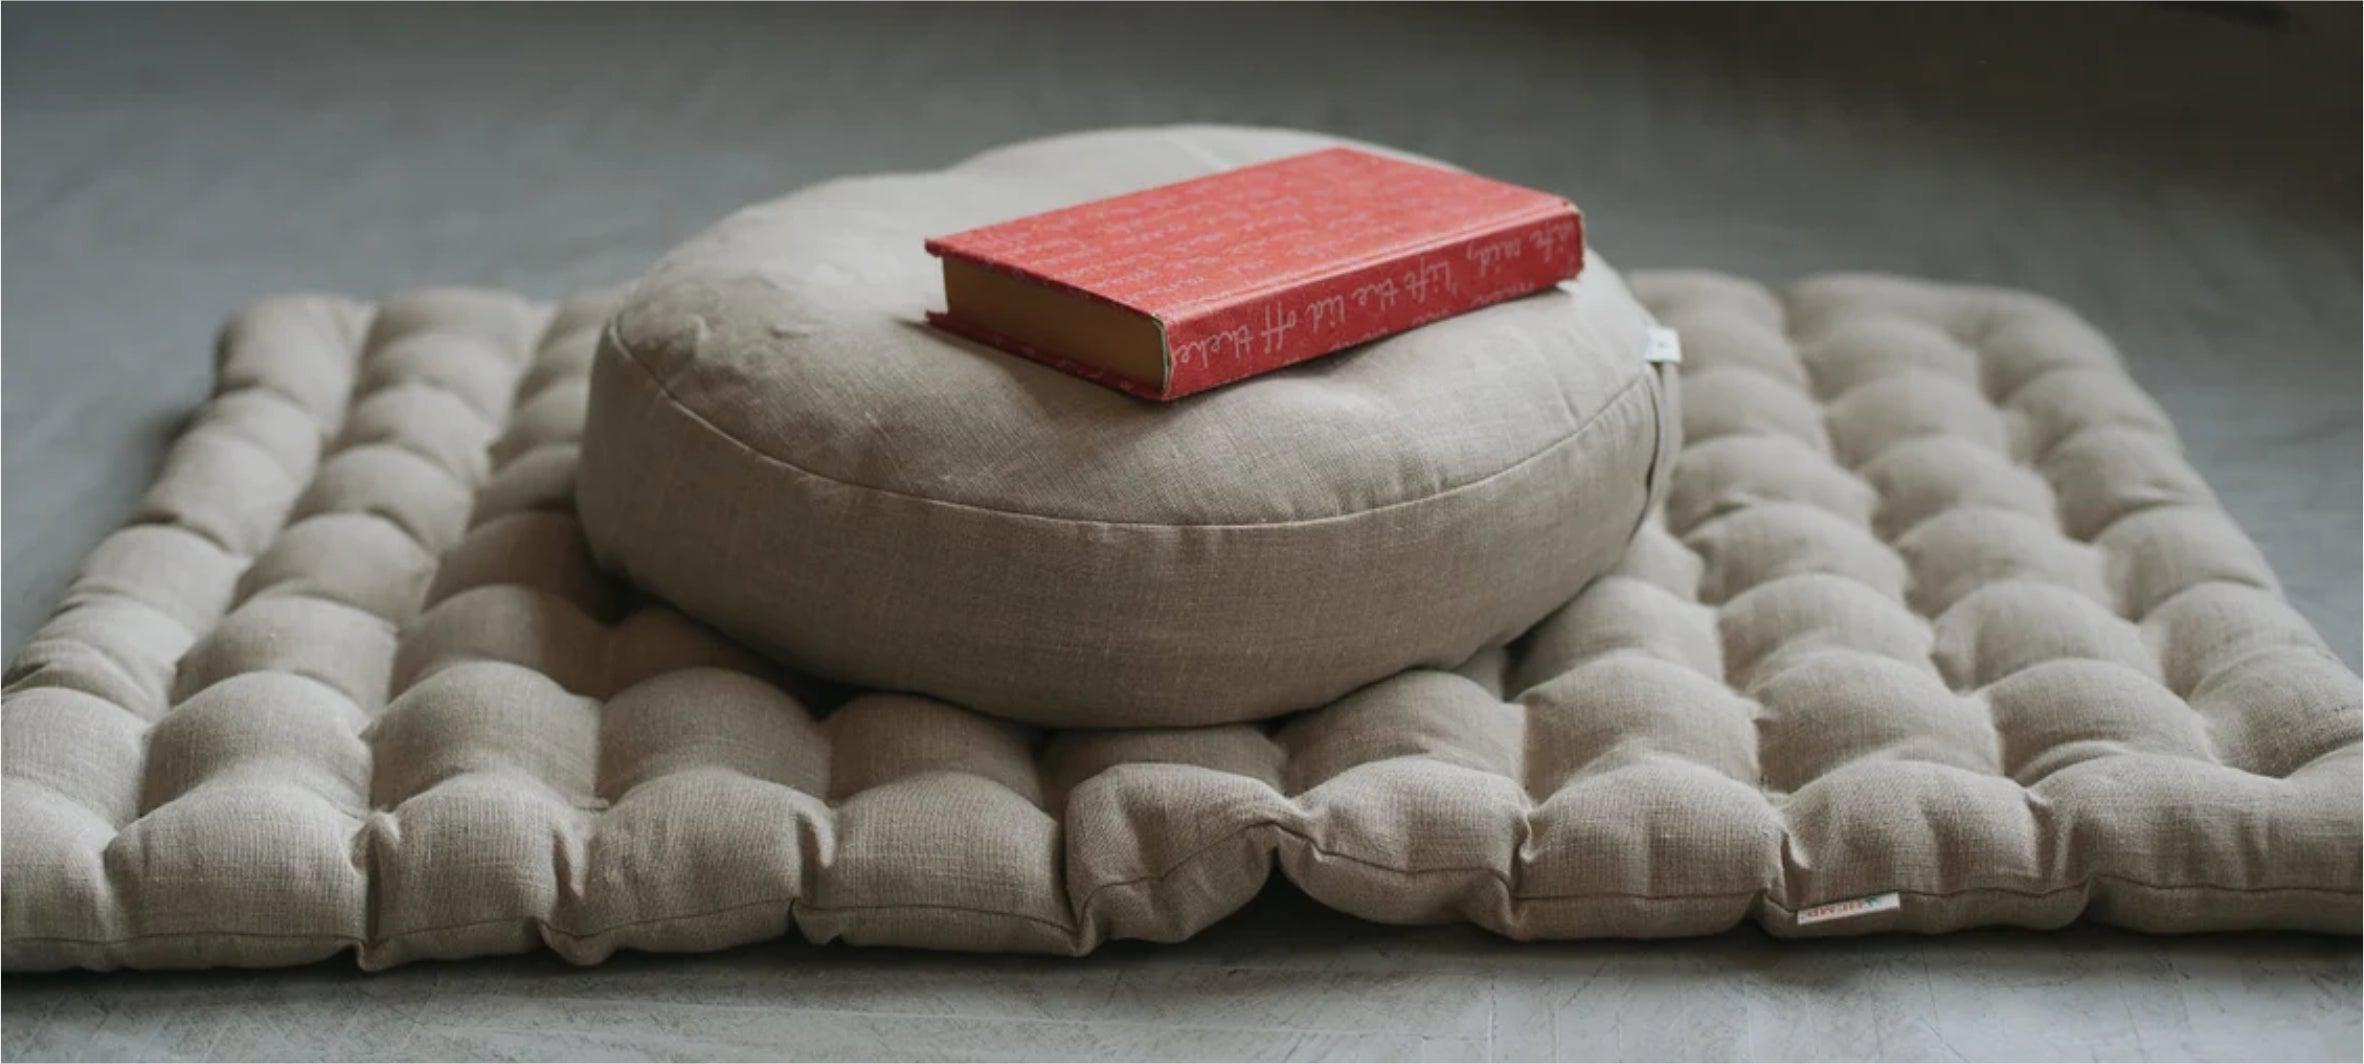 Clearance Depot - NEW Reehut Zafu Yoga Meditation Bolster Pillow Cushion  Round Cotton or Hemp - Organic Buckwheat Filled 12